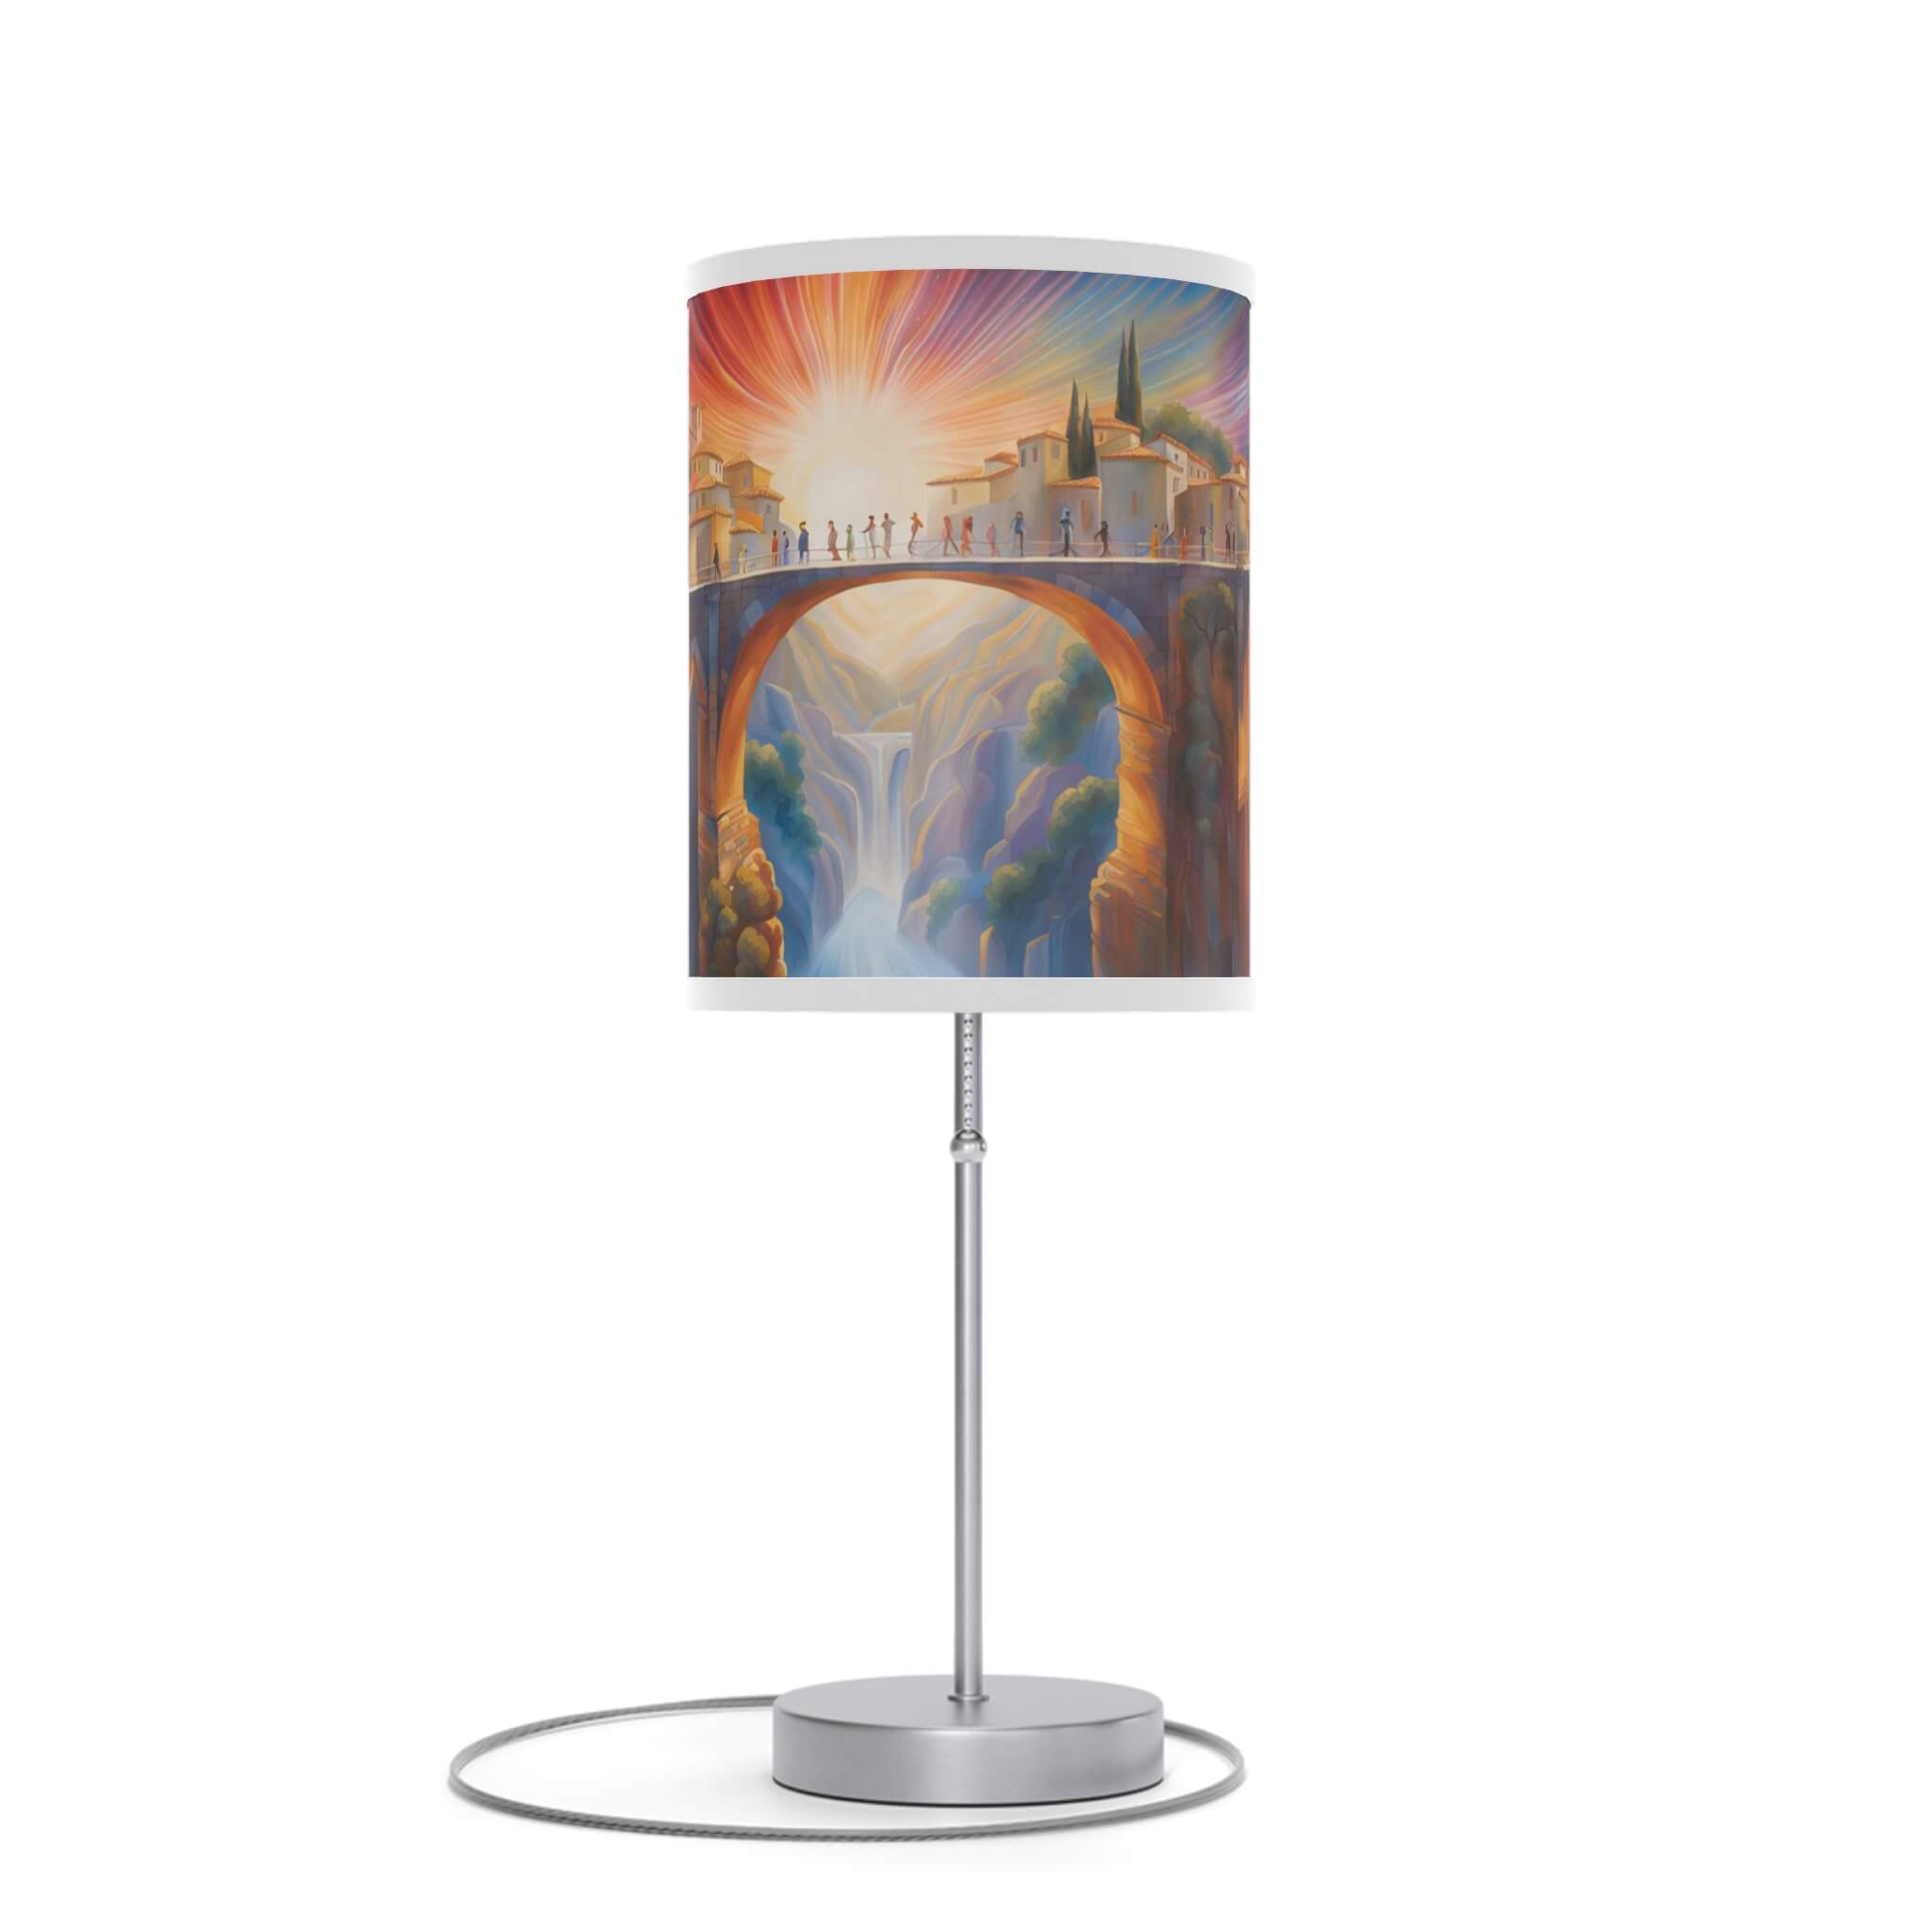 Image of DreamBridge Bedside Lamp